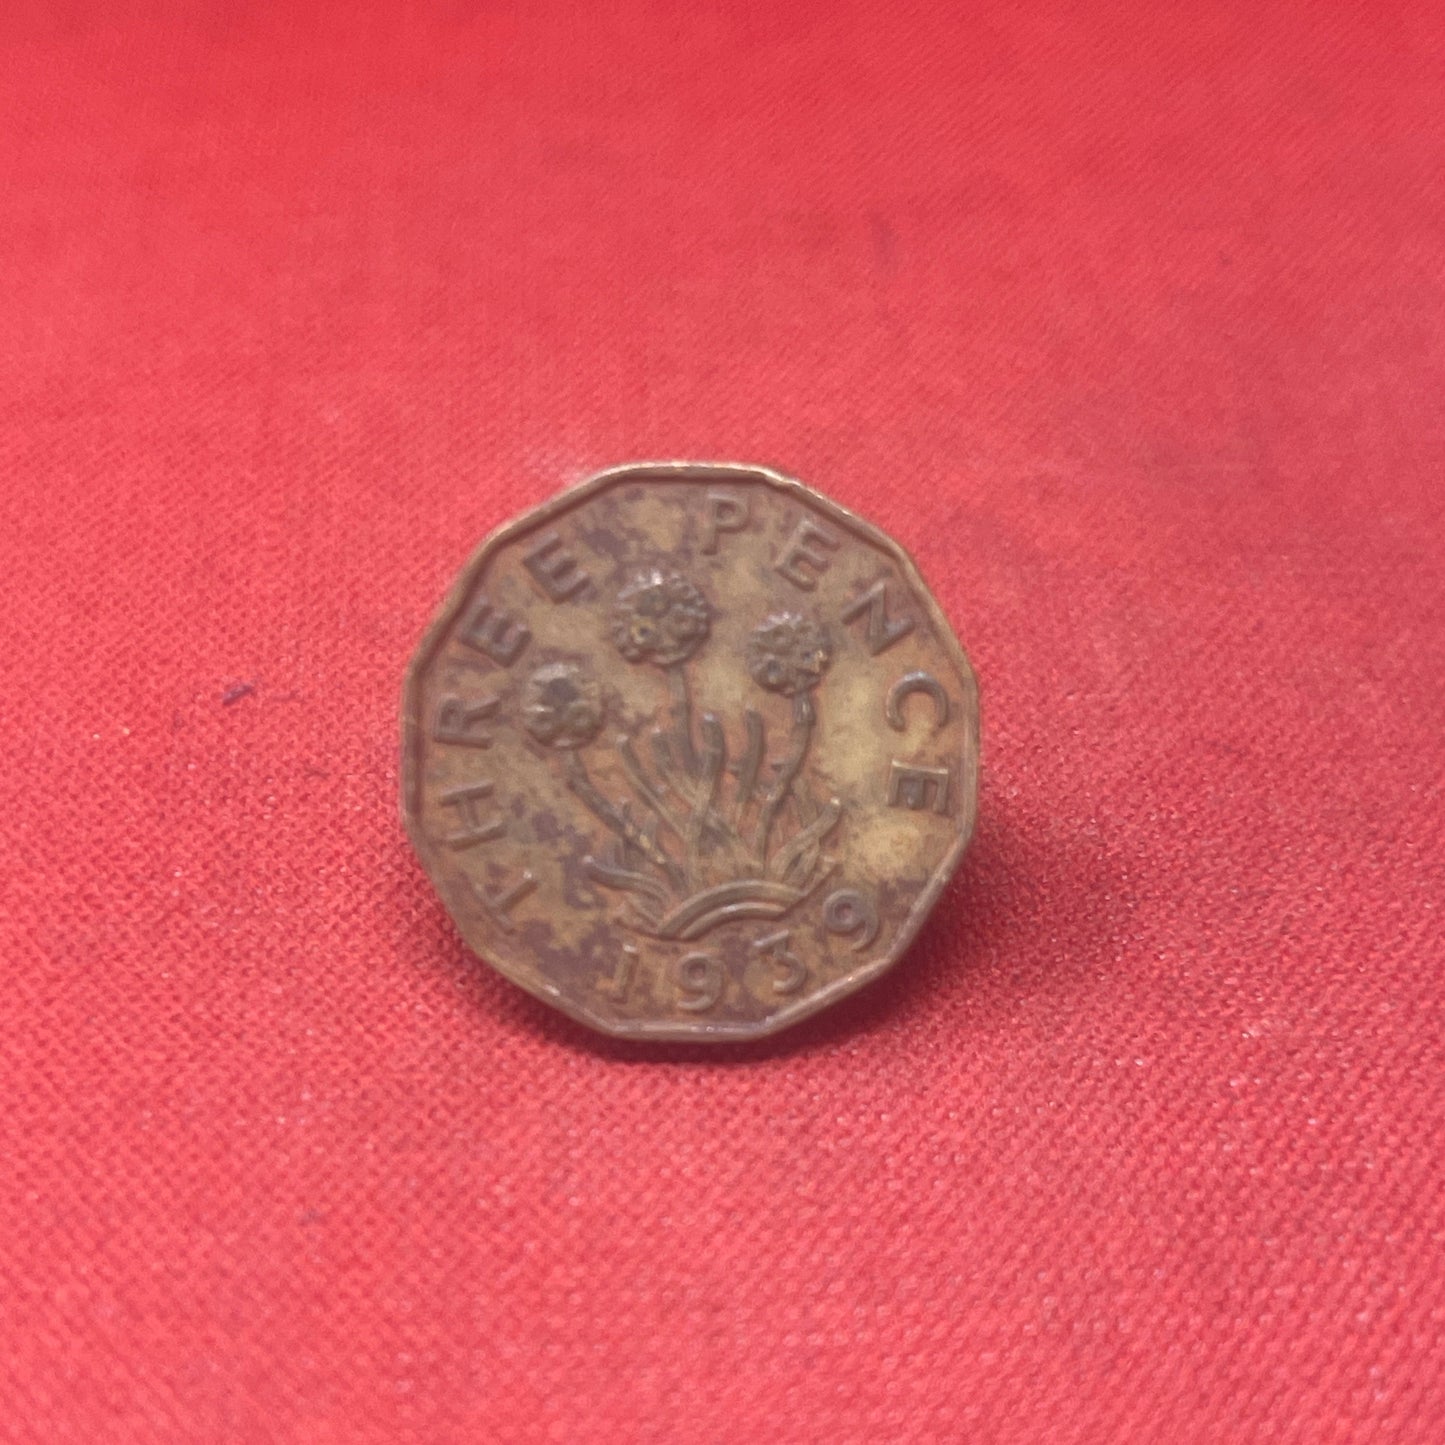 King George VI 1939  Threepence Coin